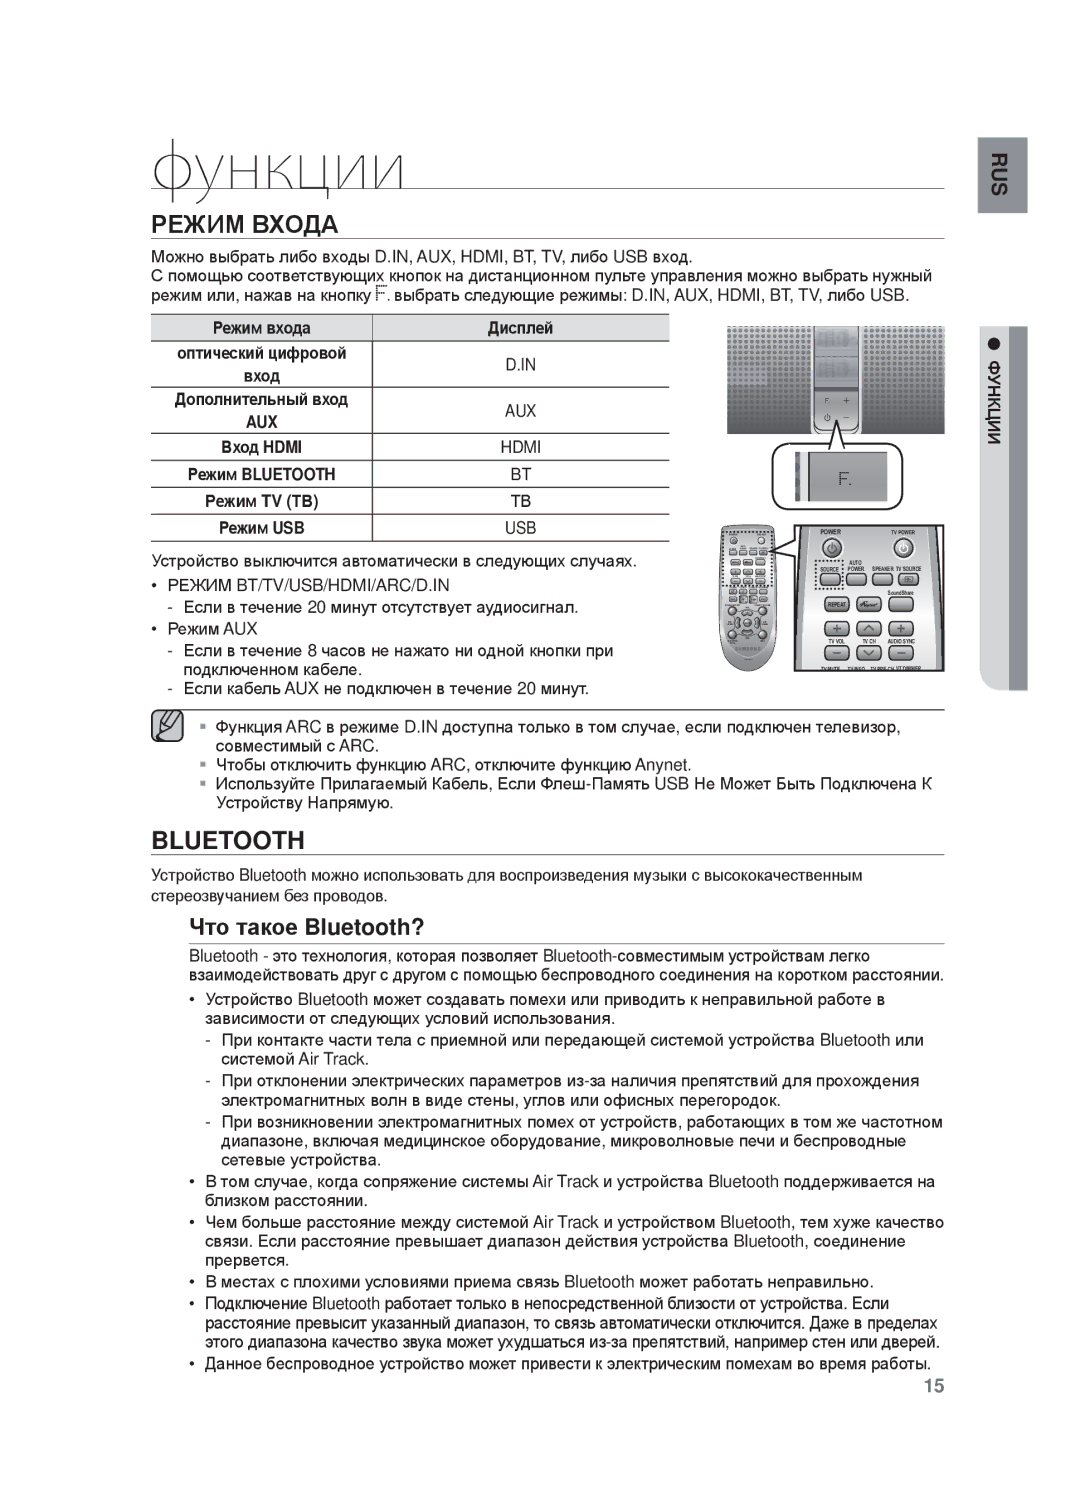 Samsung HW-F750/RU manual ɊȿЖИɆ ȼɏɈДȺ, Чтɨ тɚкɨɟ Bluetooth?, Ɋɟжим вɯɨдɚ Диɫплɟɣ Ɨптичɟɫкиɣ цифɪɨвɨɣ, ФУɇКЦИИ 